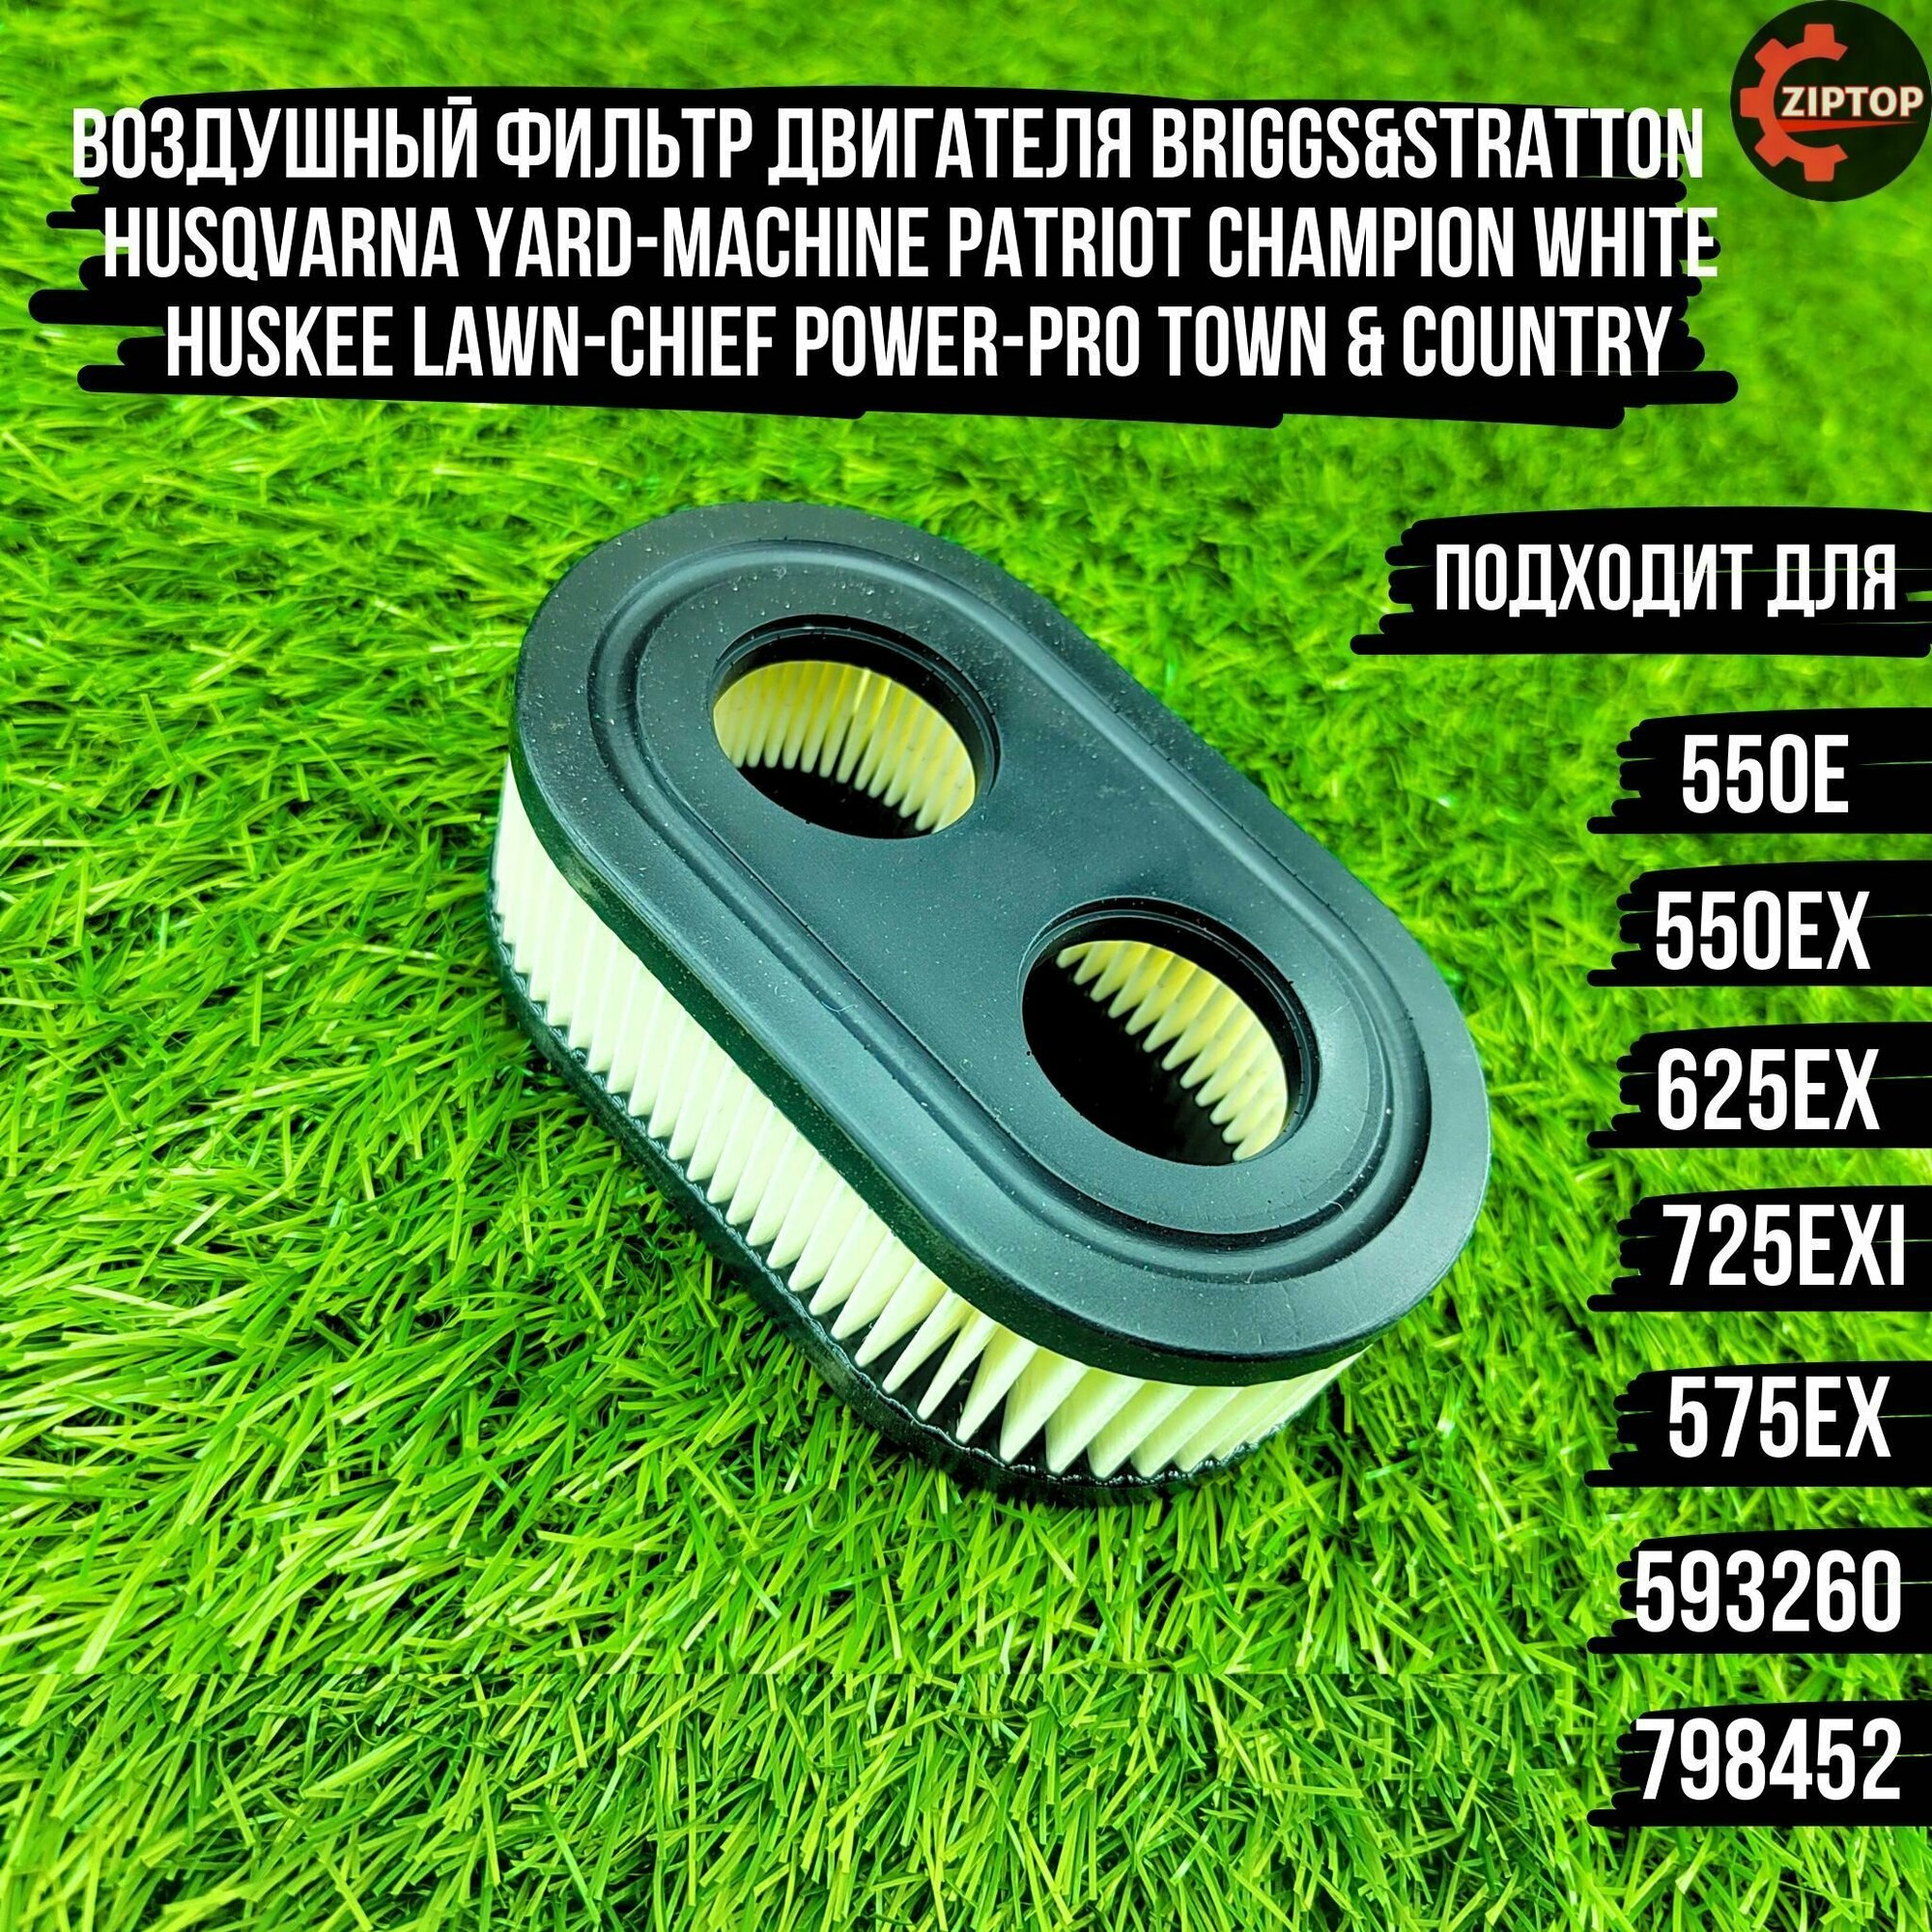 Воздушный фильтр двигателя Briggs&Stratton 550E, 550EX, 625EX, 725EXI, 575EX 593260, 798452, для газонокосилок Husqvarna Yard-Machine Patriot Champion White Huskee Lawn-Chief Power-Pro Town & Country